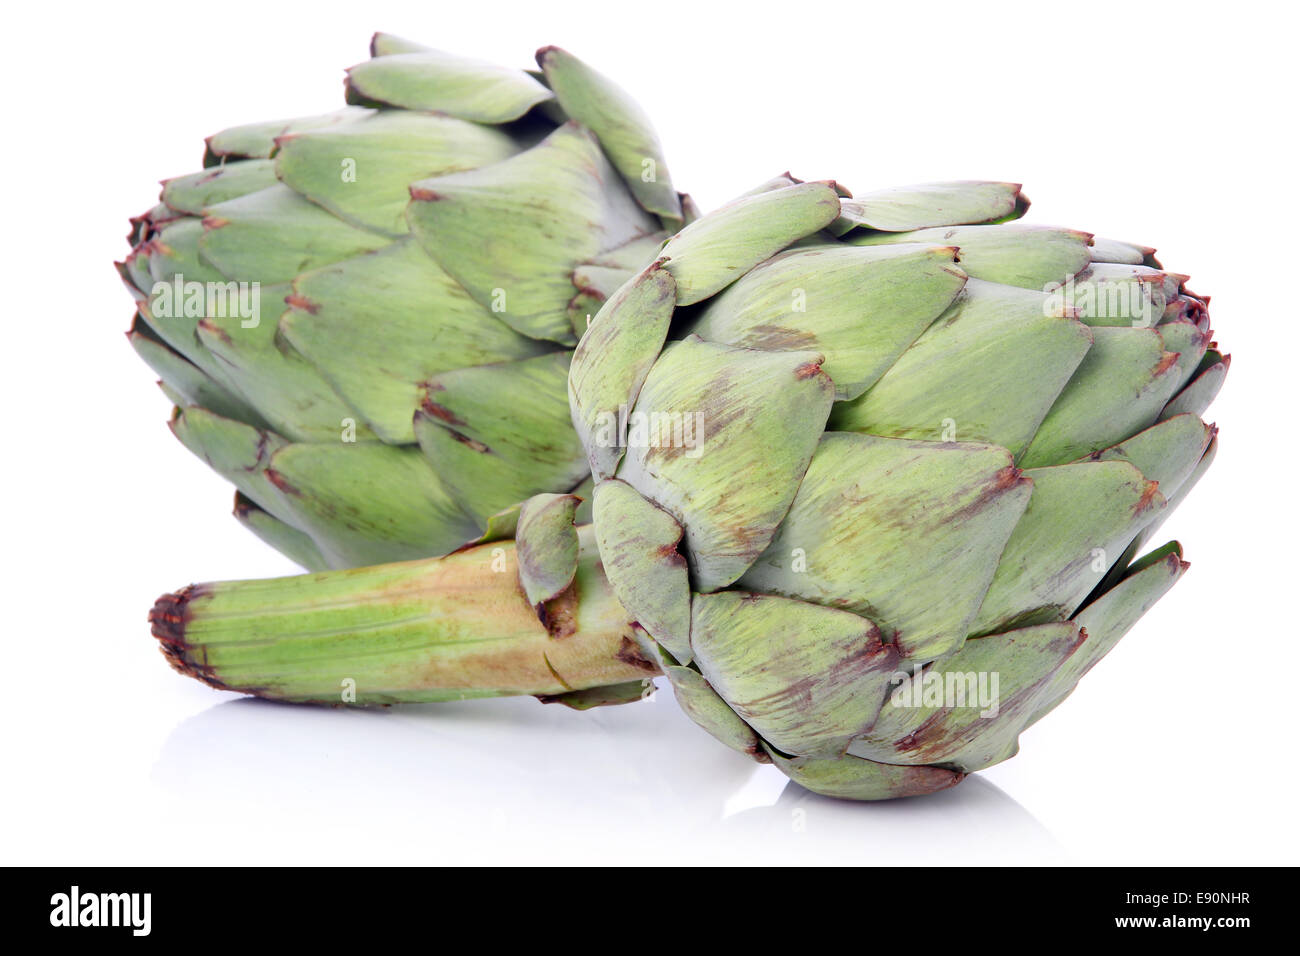 Ripe green artichoke vegetables isolated Stock Photo